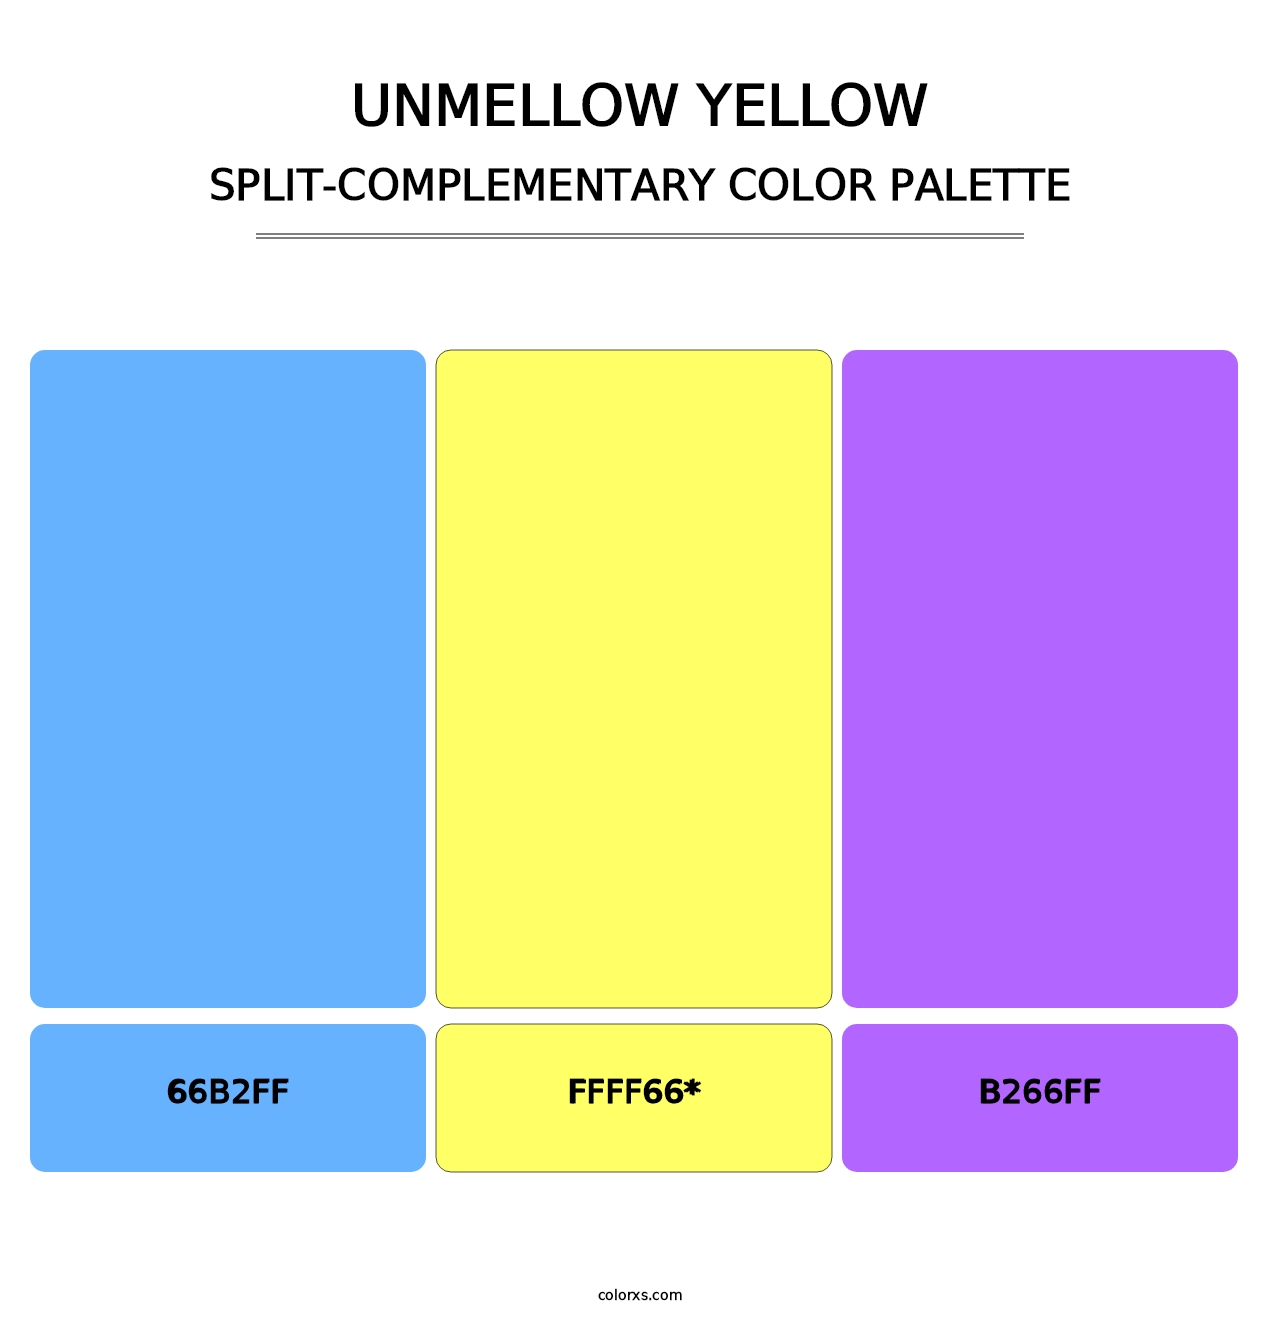 Unmellow Yellow - Split-Complementary Color Palette